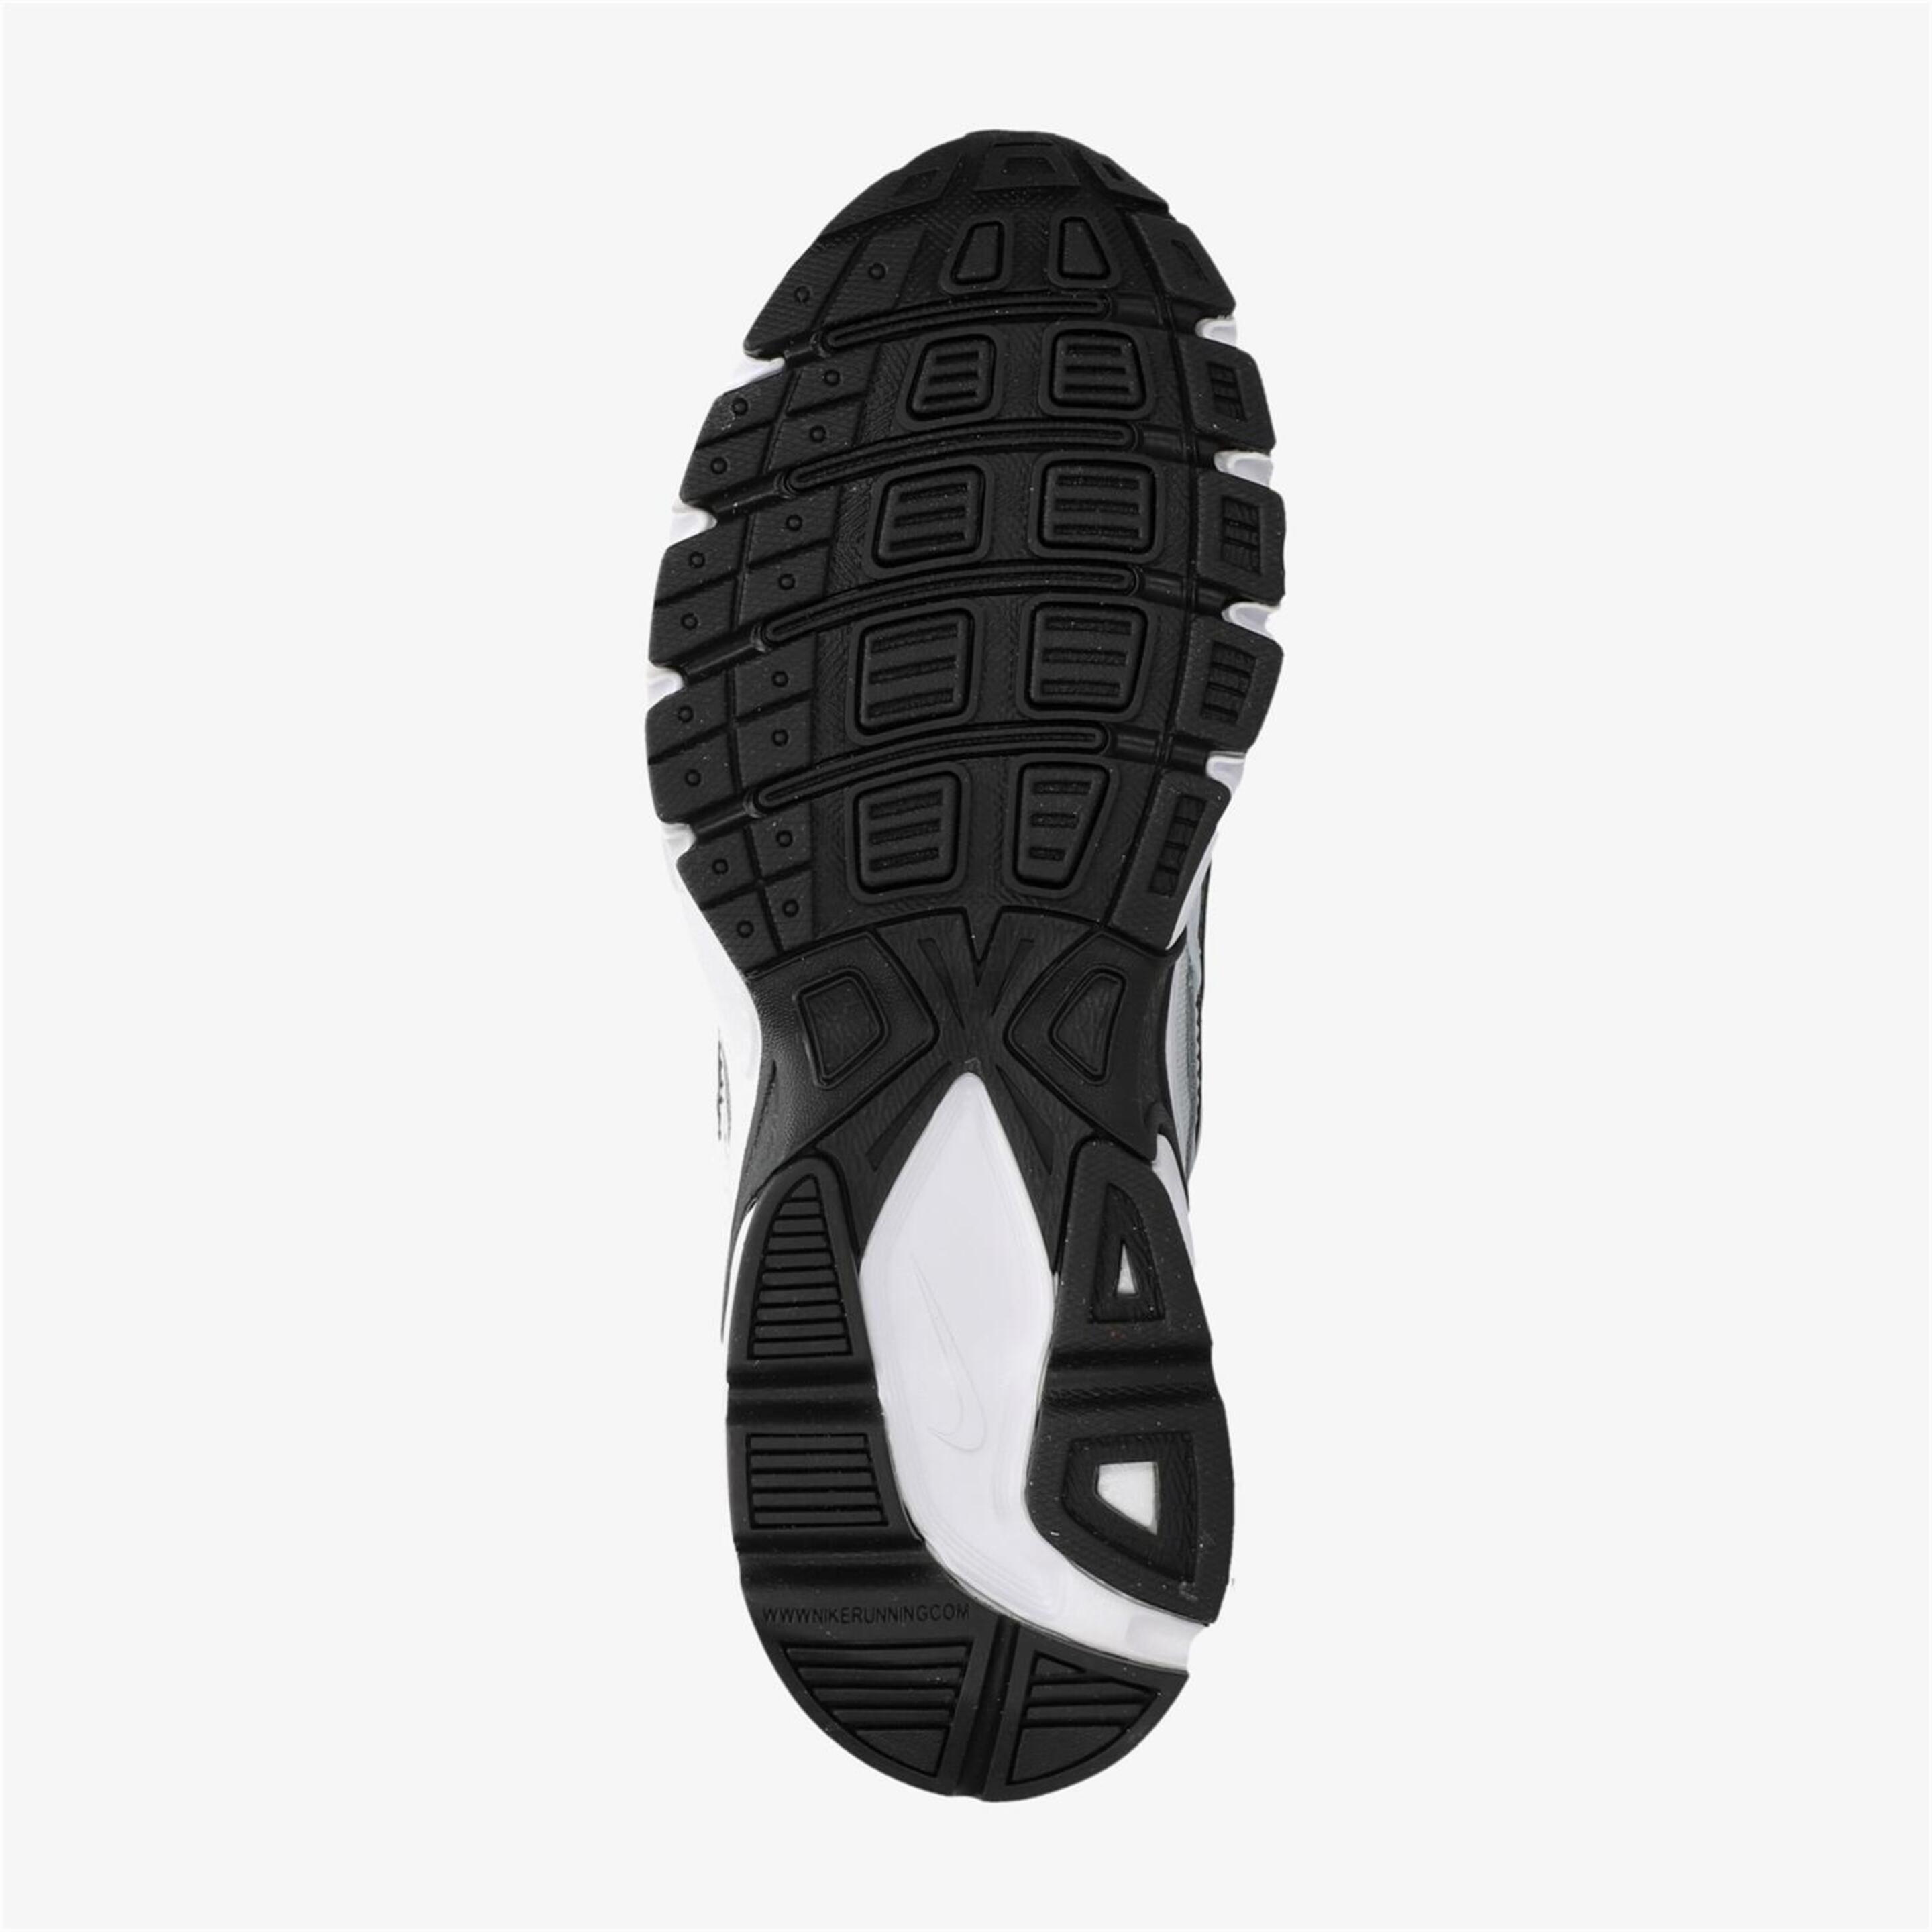 Nike Initiator - Gris - Zapatillas Retro Mujer